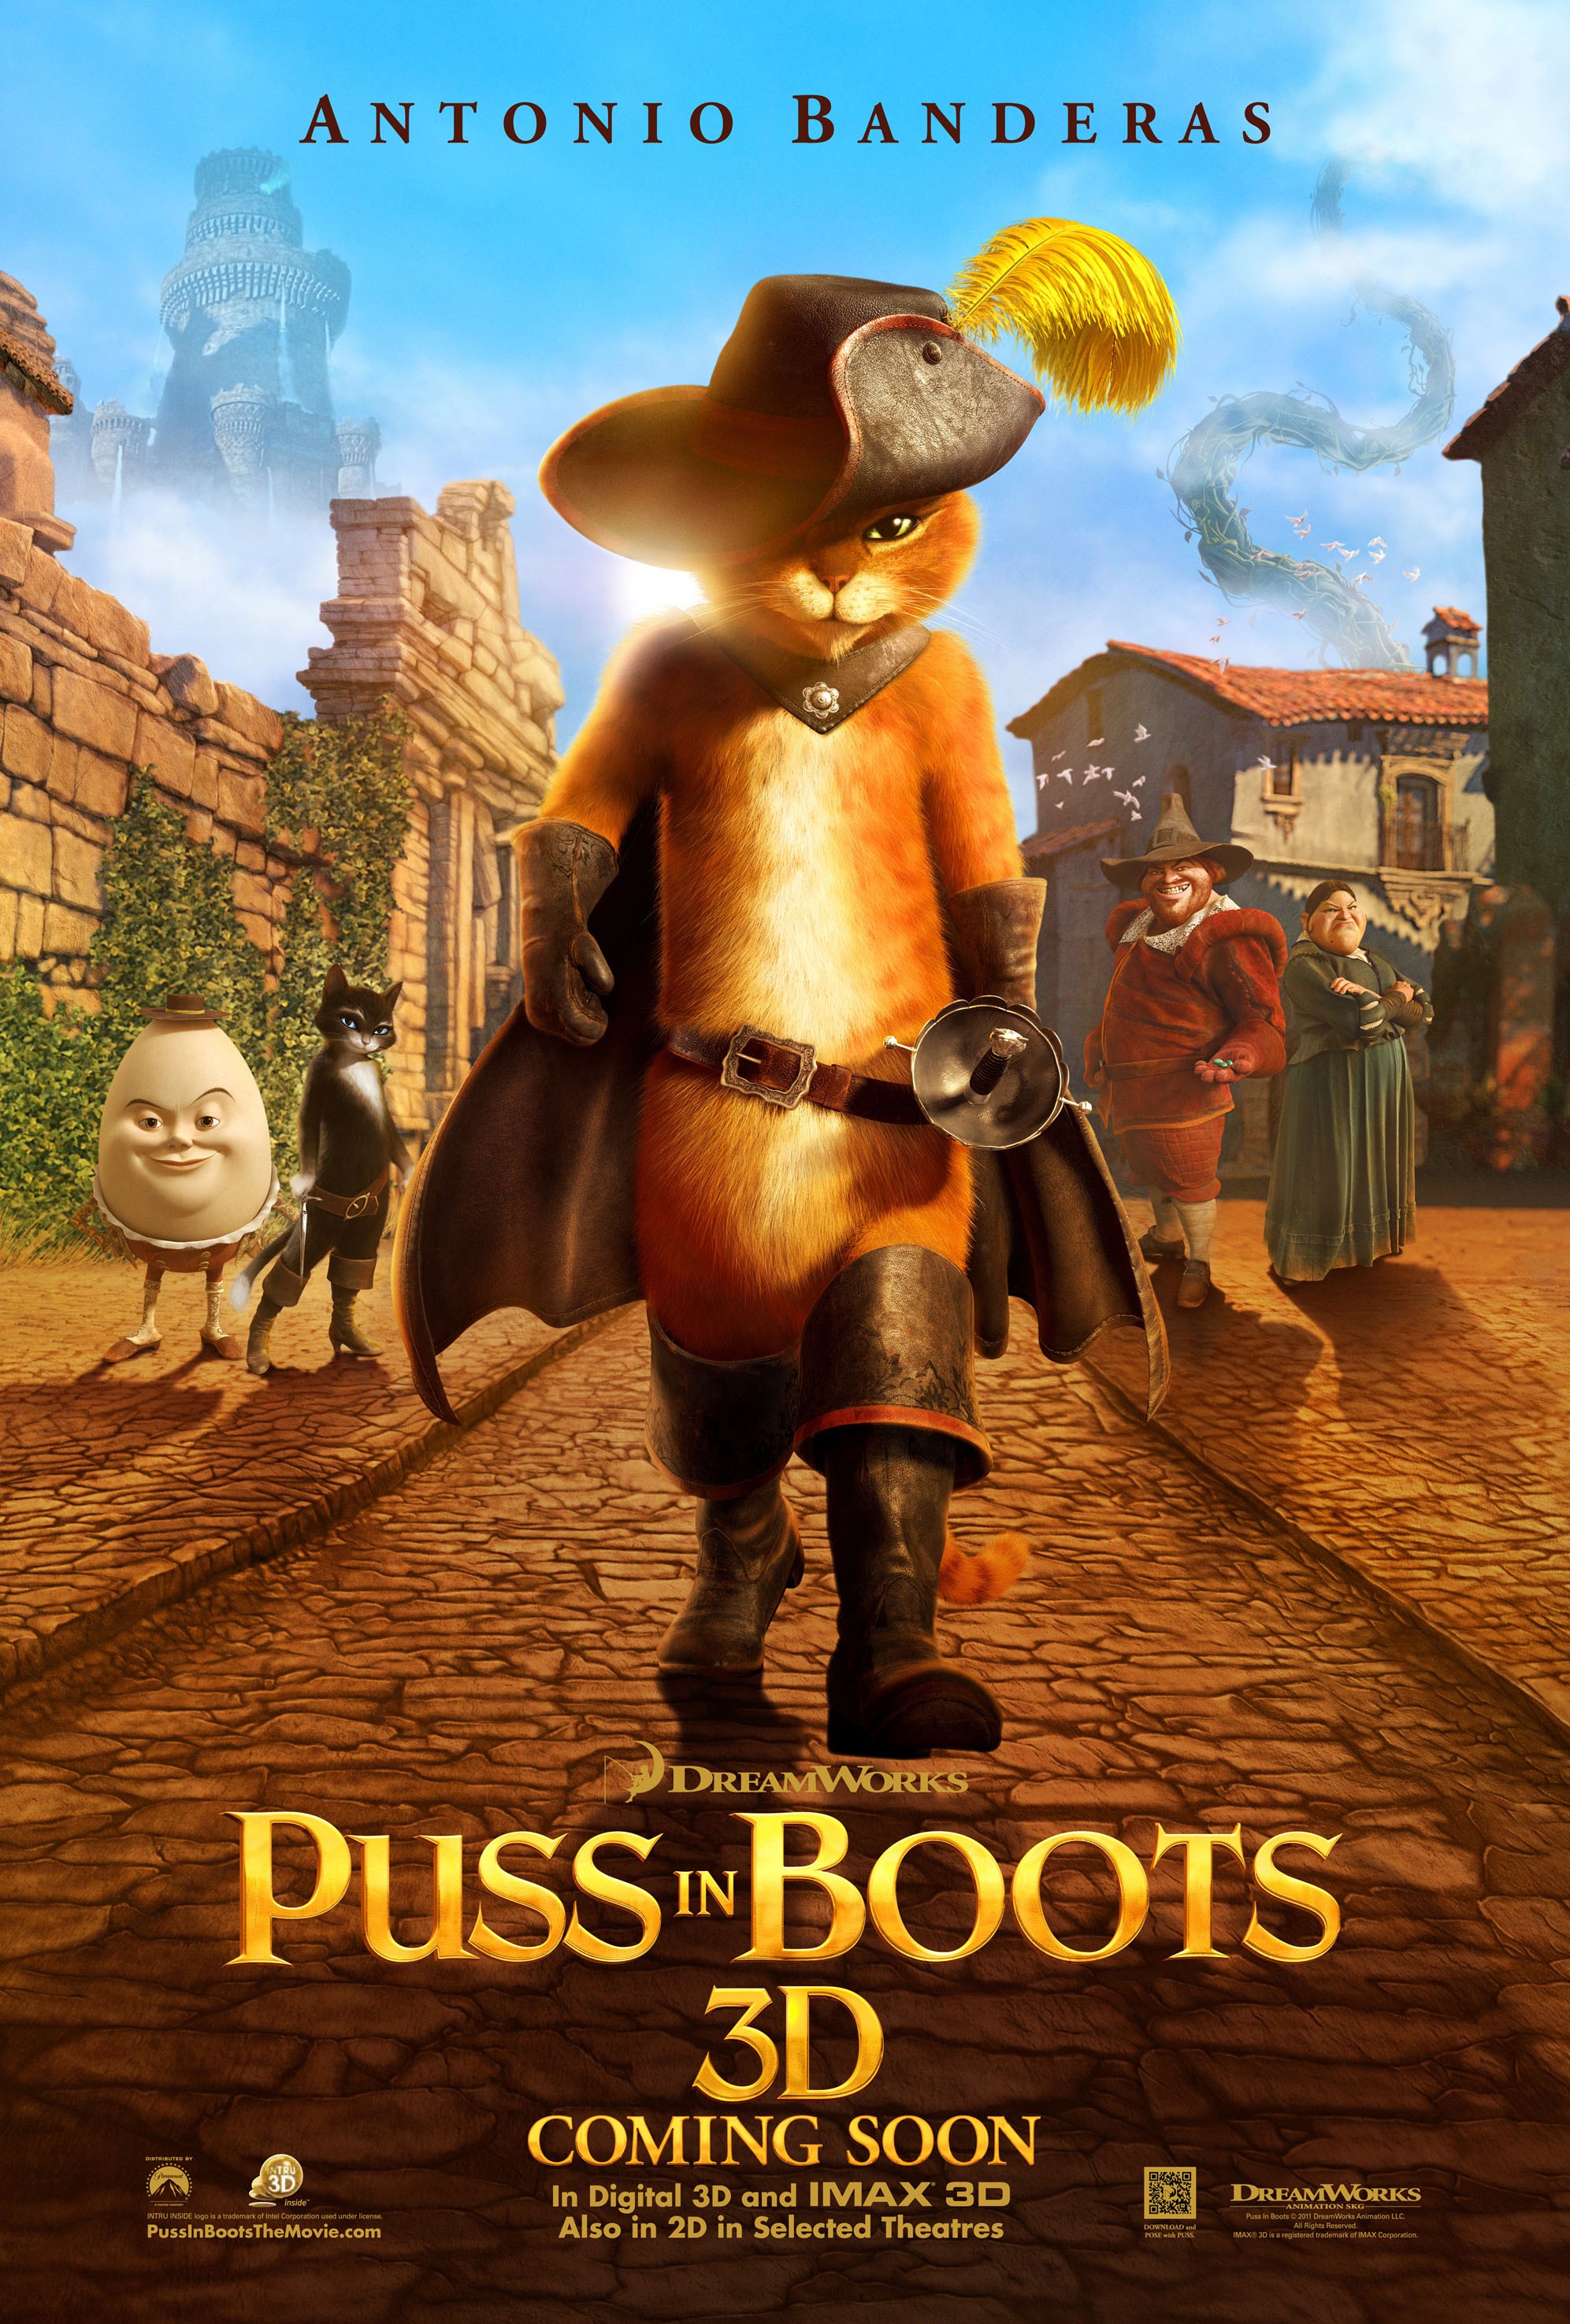 Puss in Boots (film) | WikiShrek | Fandom powered by Wikia1993 x 2951